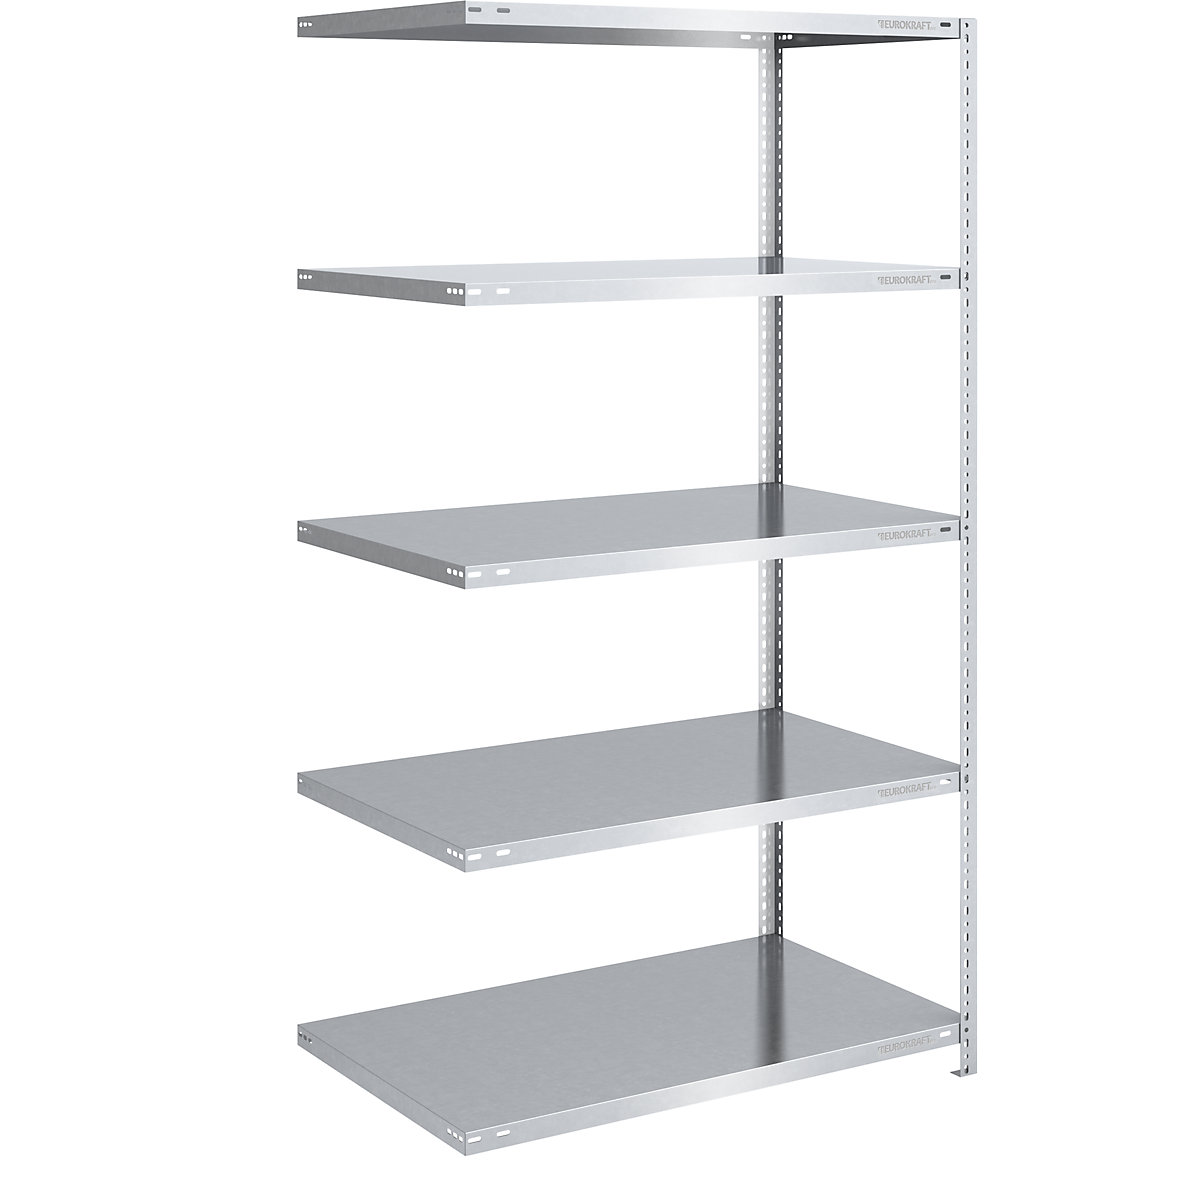 Bolt-together shelf unit, light duty, zinc plated – eurokraft pro, shelf unit height 2000 mm, shelf width 1000 mm, depth 800 mm, extension shelf unit-9